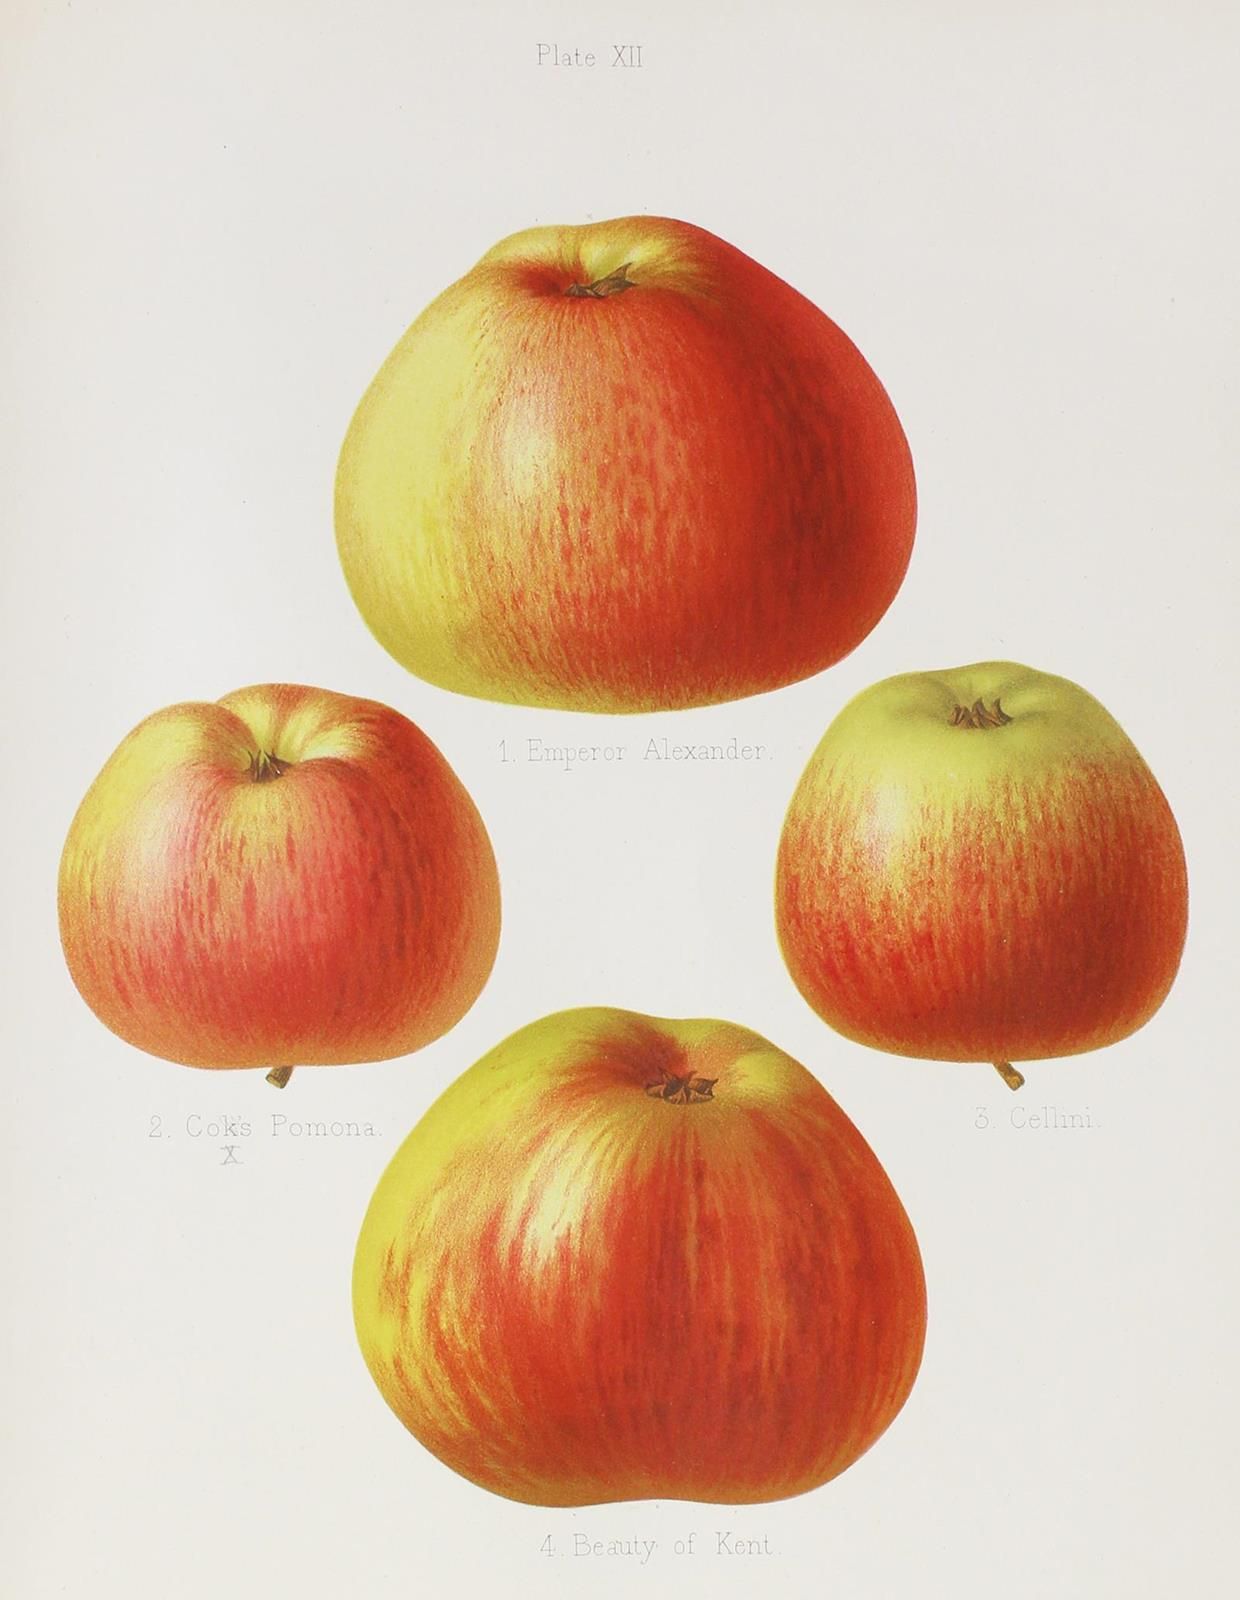 Bull,H.G. The Herefordshire Pomona, 包含最令人尊敬的各种苹果和梨的原始数字和描述。2卷。Hereford, Jakeman &hellip;